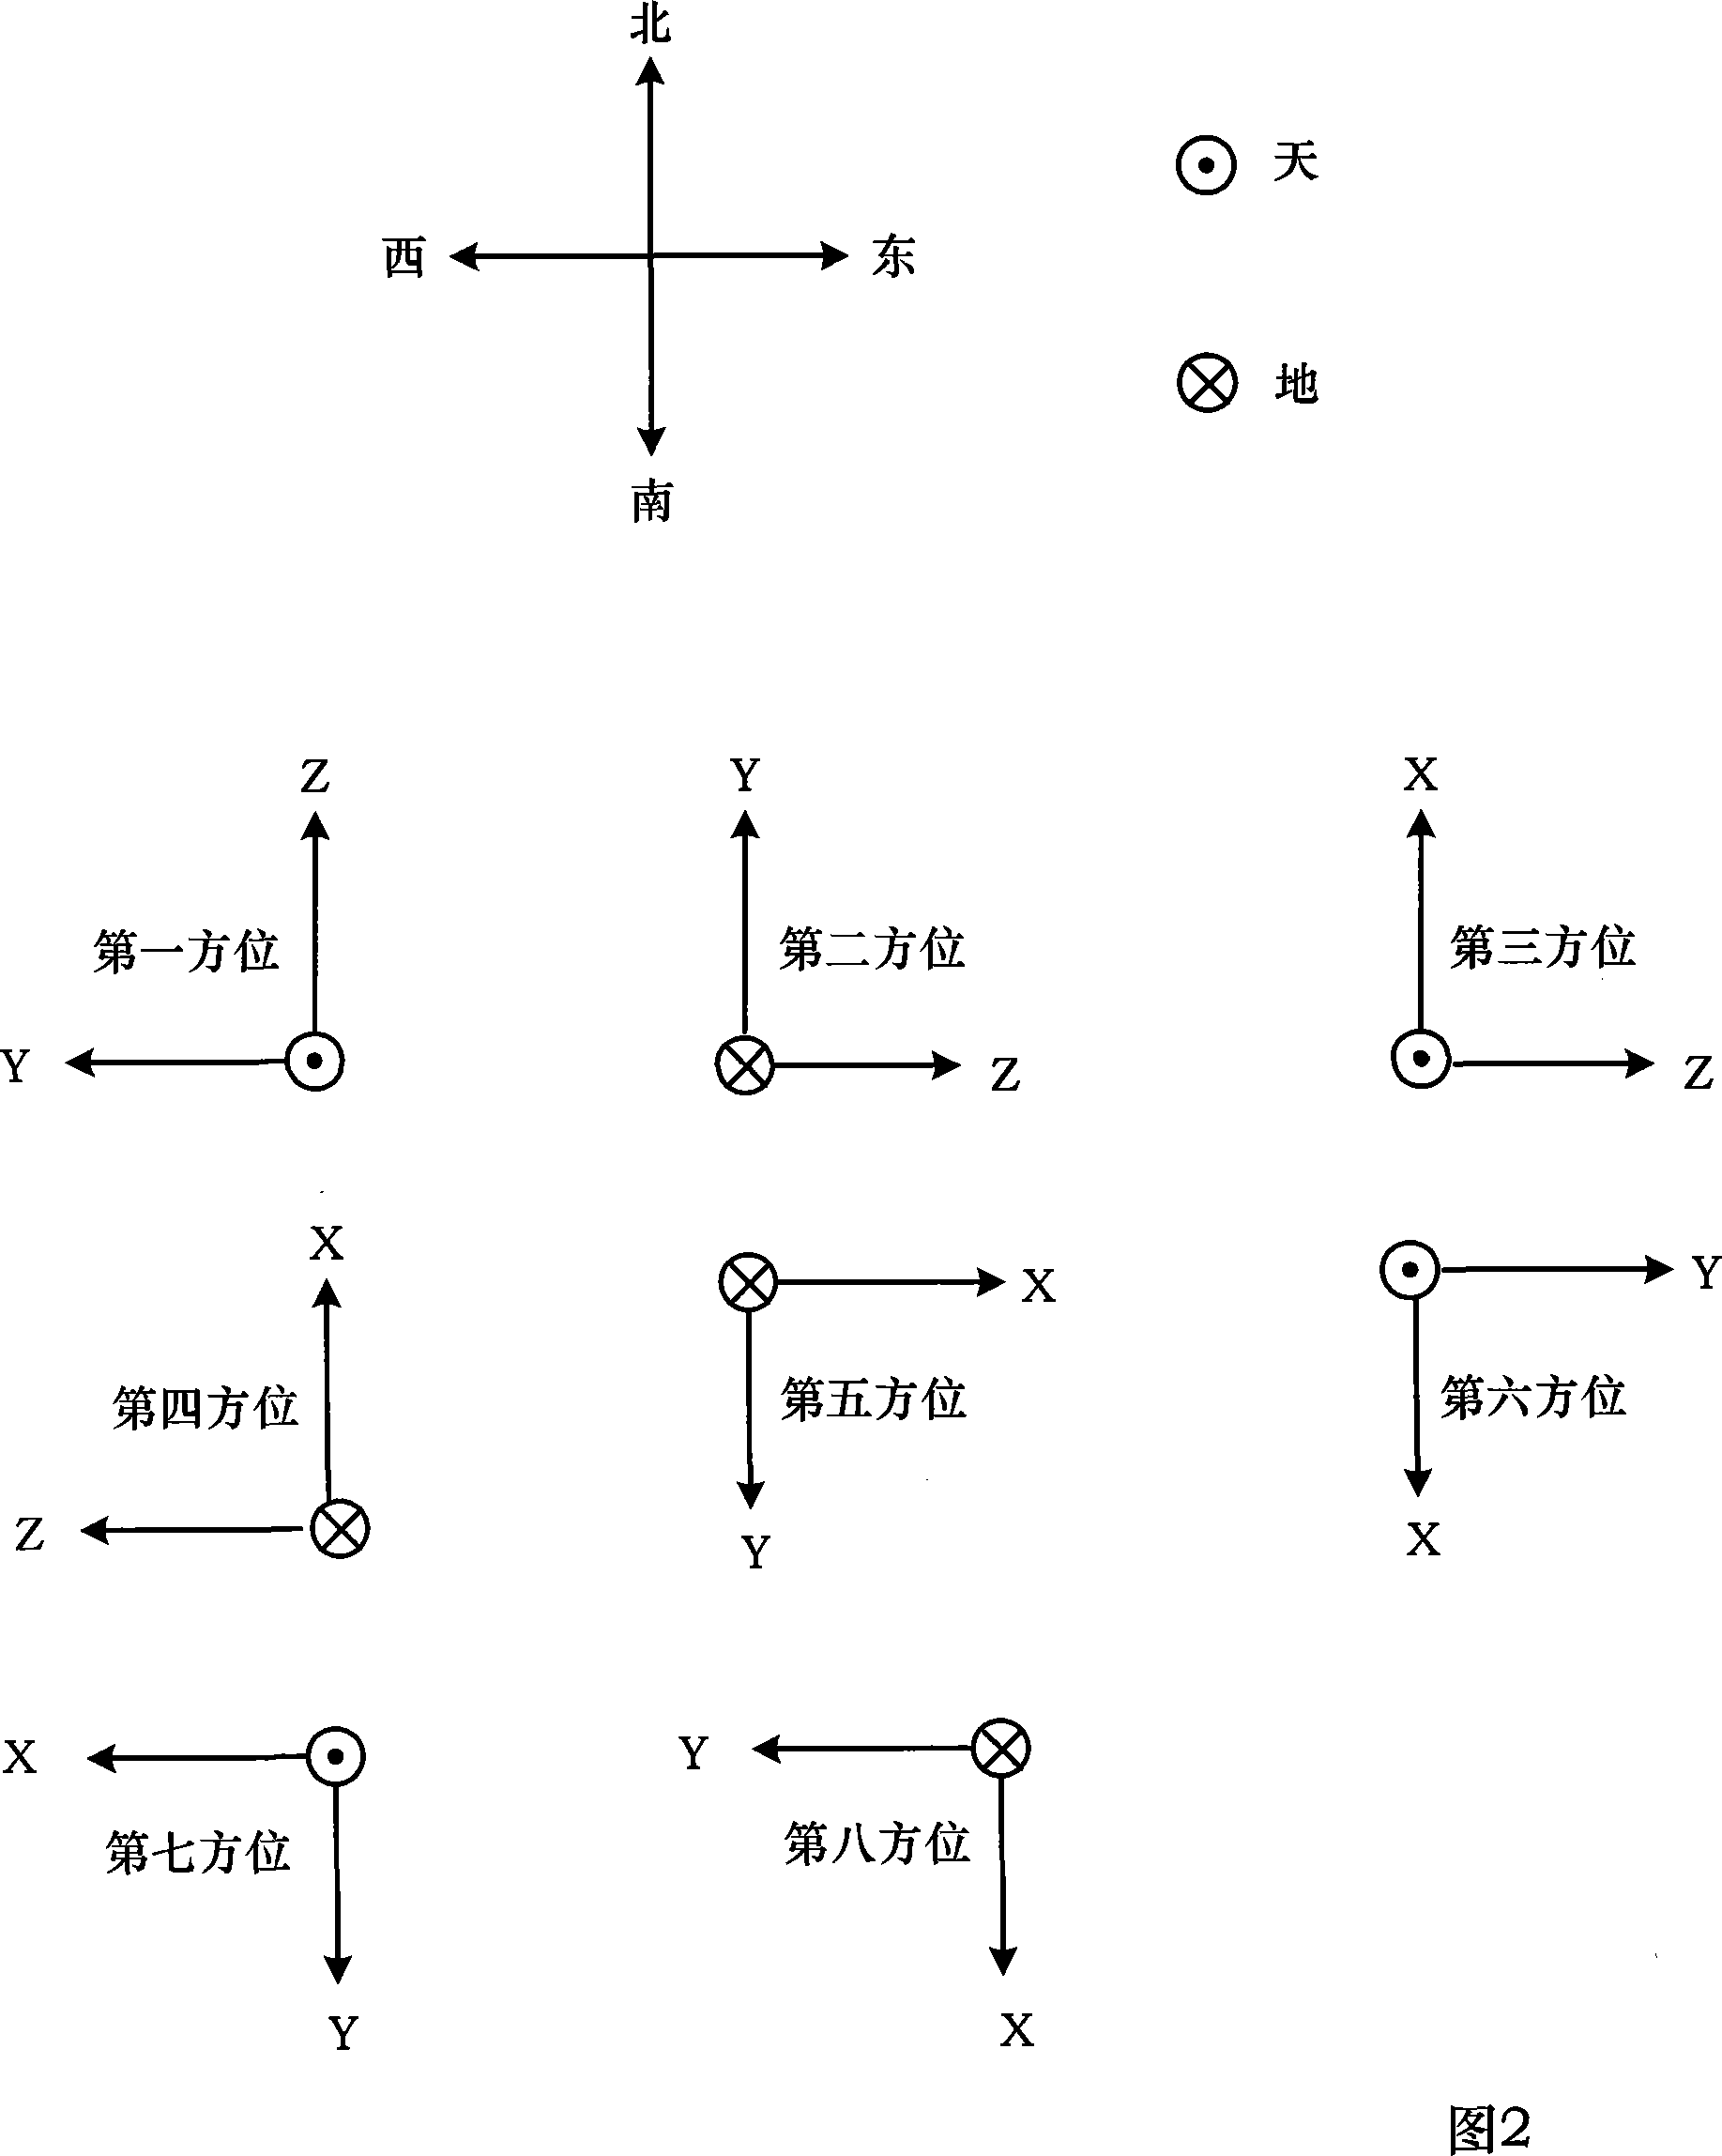 Method for standardization of optimum 8 positions of flexure gyroscope